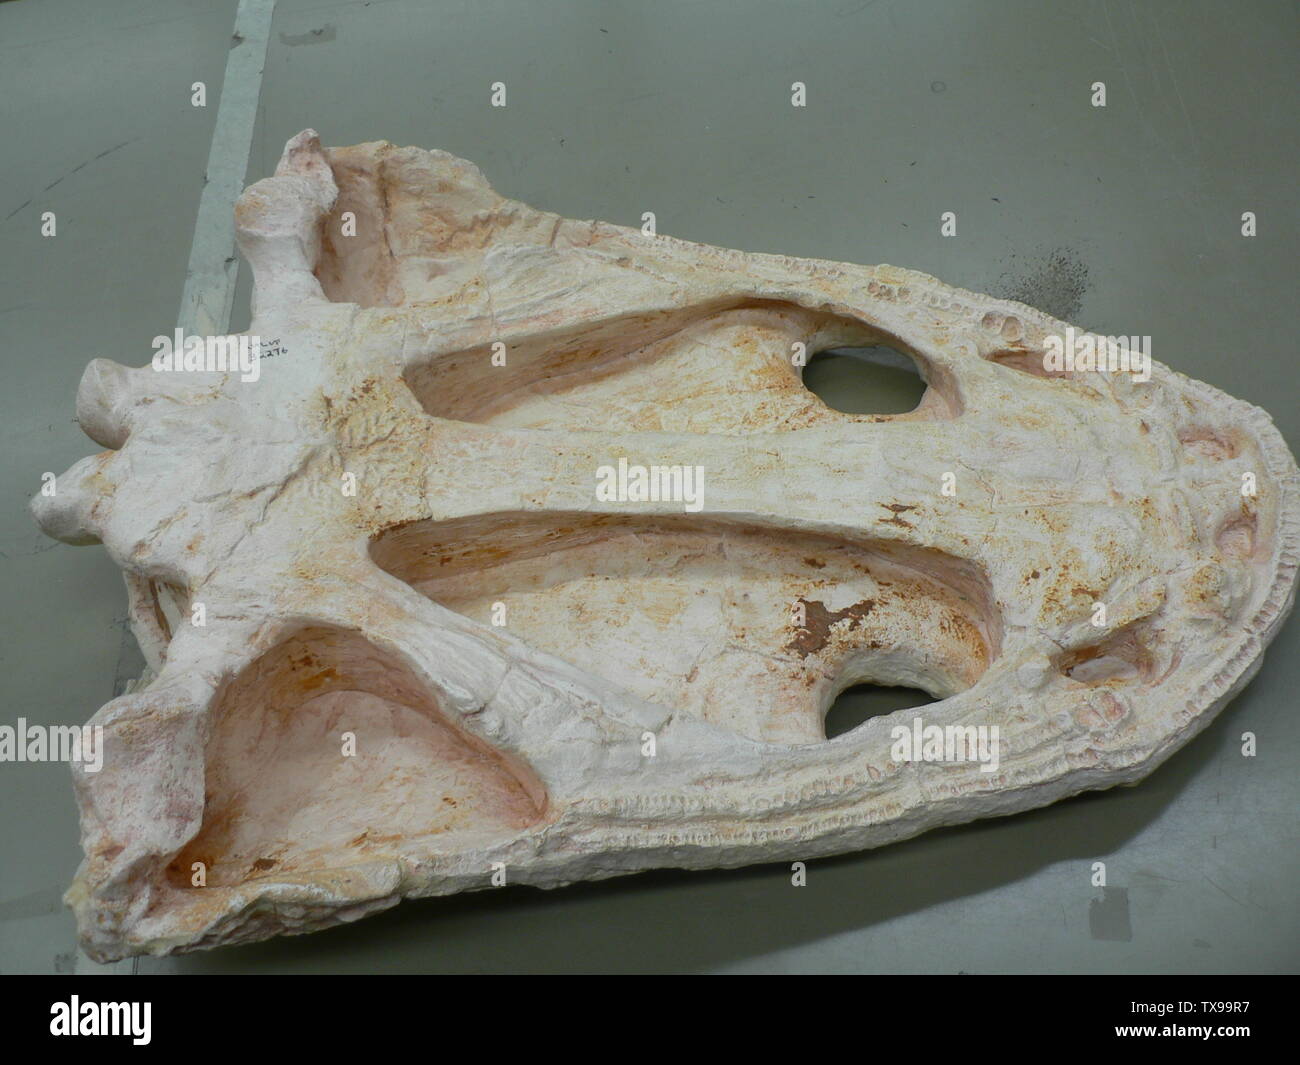 Metoposaurus skull - ventral view. UALVP.; 2 January 2009 (original upload date); Own work by the original uploader; Jeyradan; Stock Photo